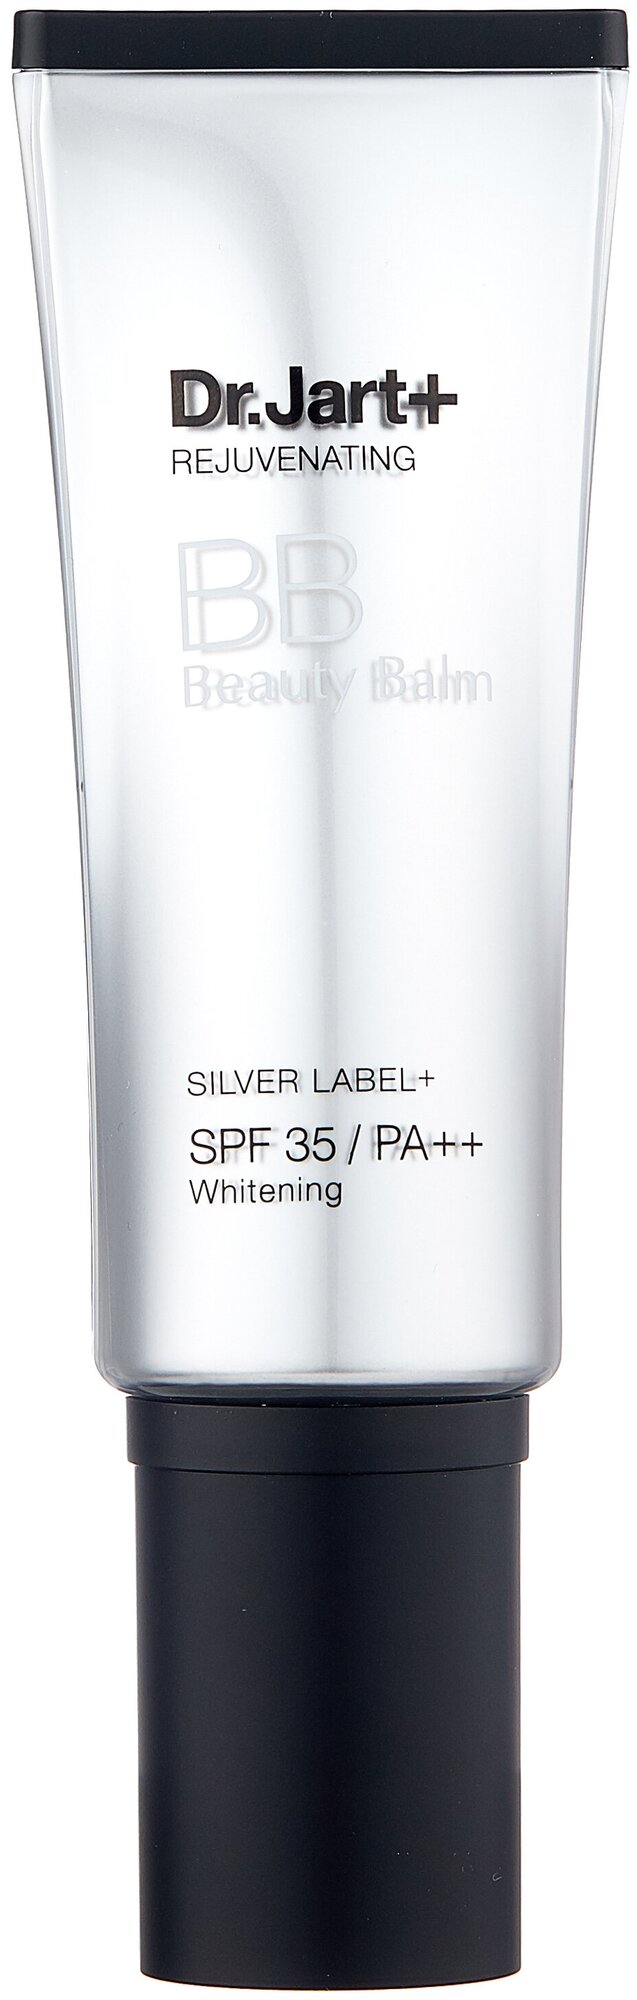 Dr. Jart+ BB крем Rejuvenating Silver Label, SPF 35, 40 г, 40 мл, оттенок: серебристый